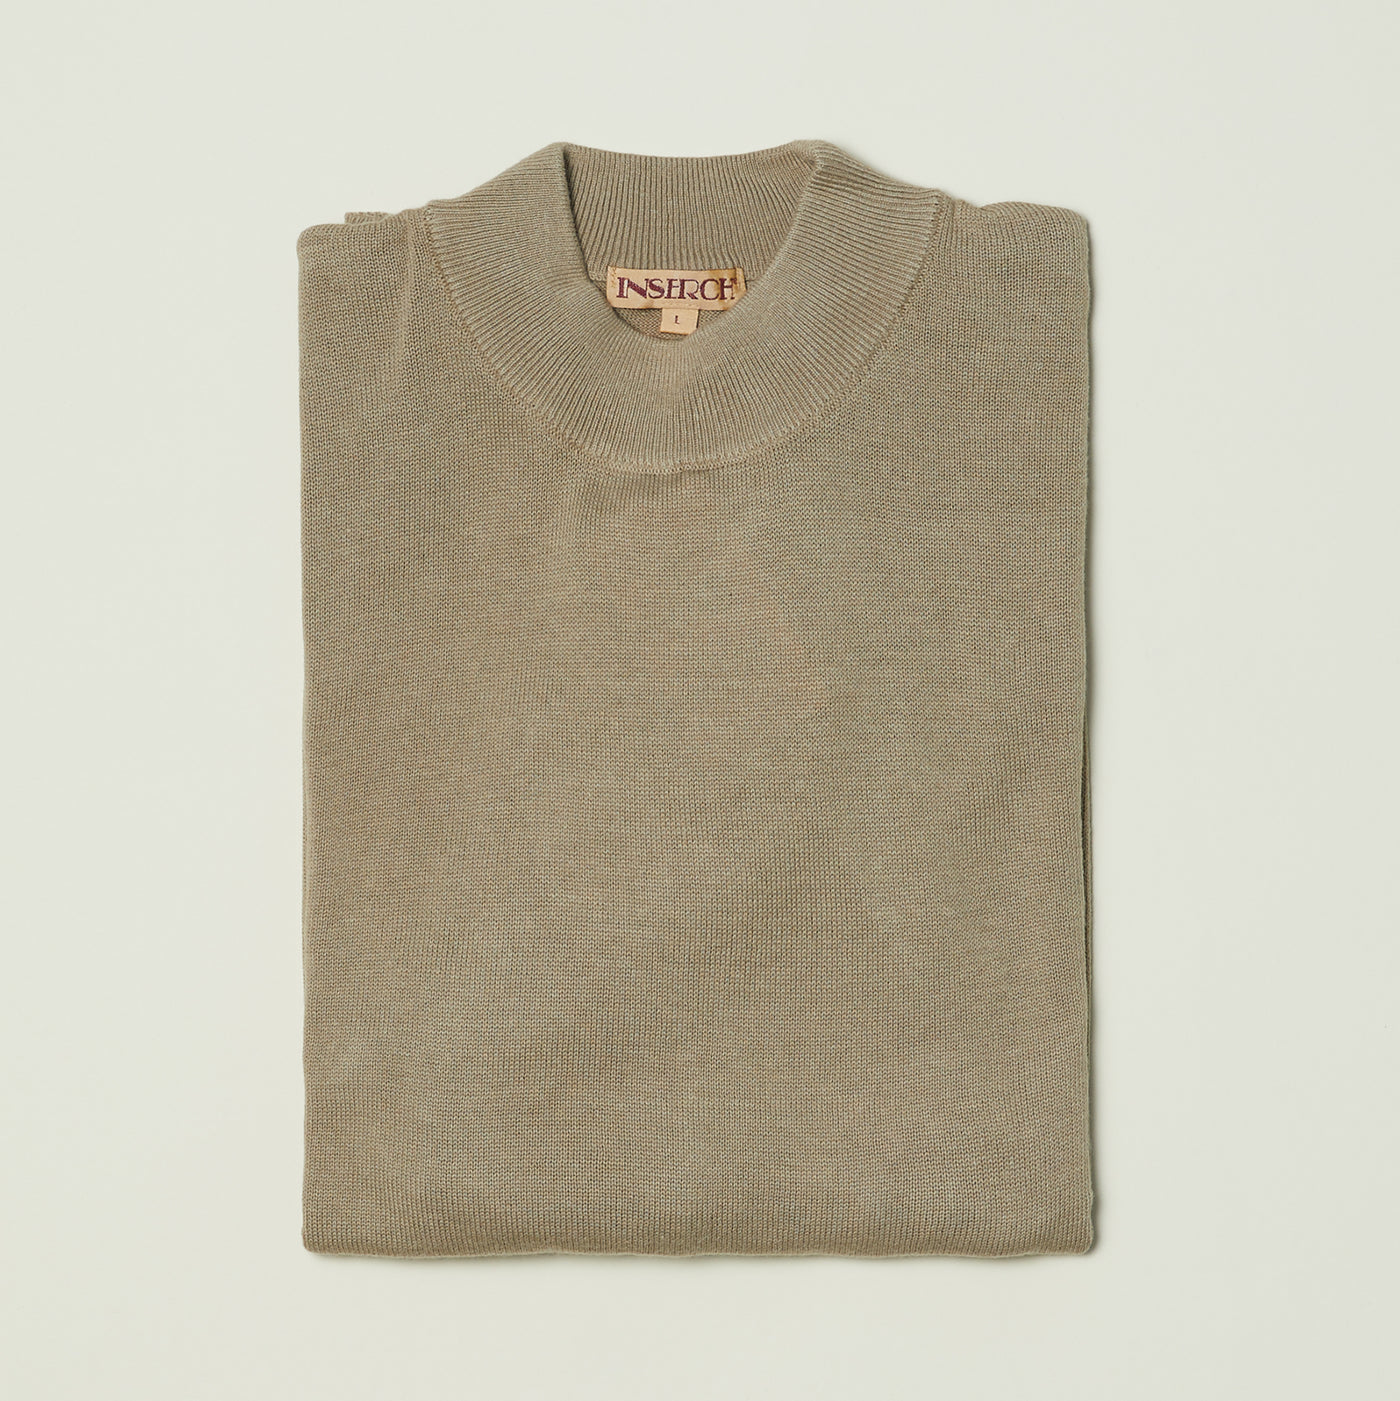 Cotton Blend Mock Neck Sweater - Beige & Browns - INSERCH